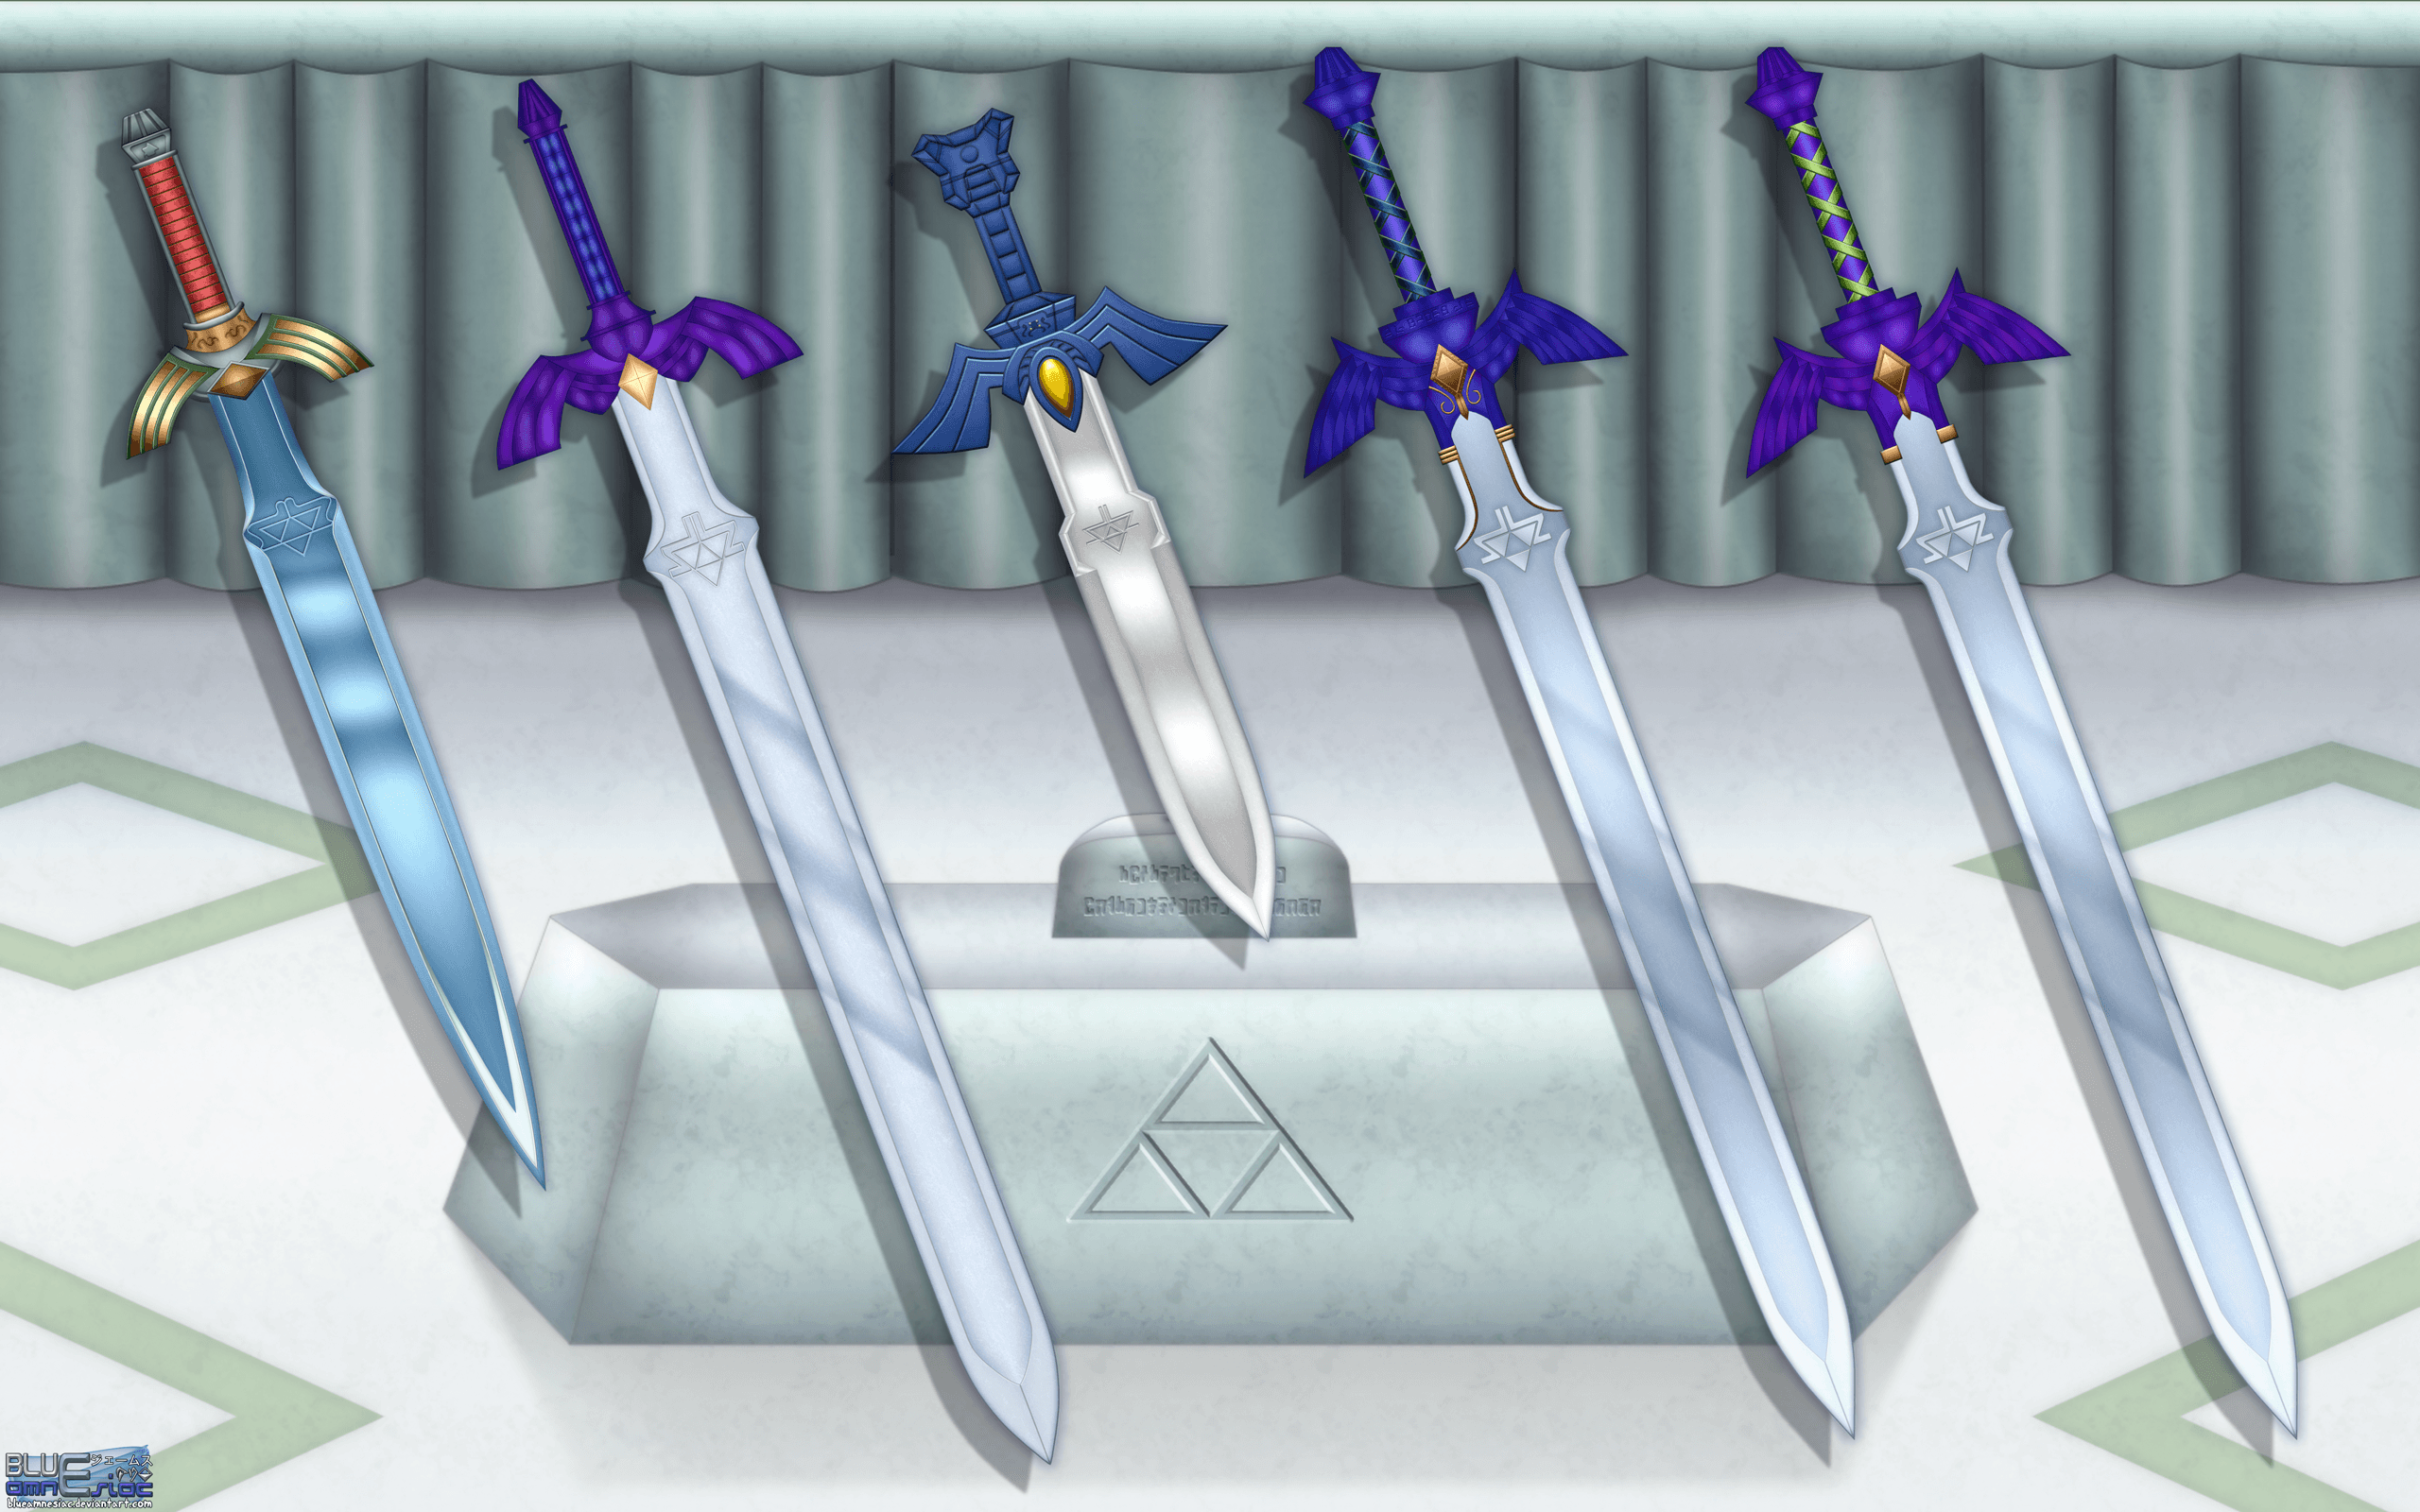 Evolution of the Master Sword.